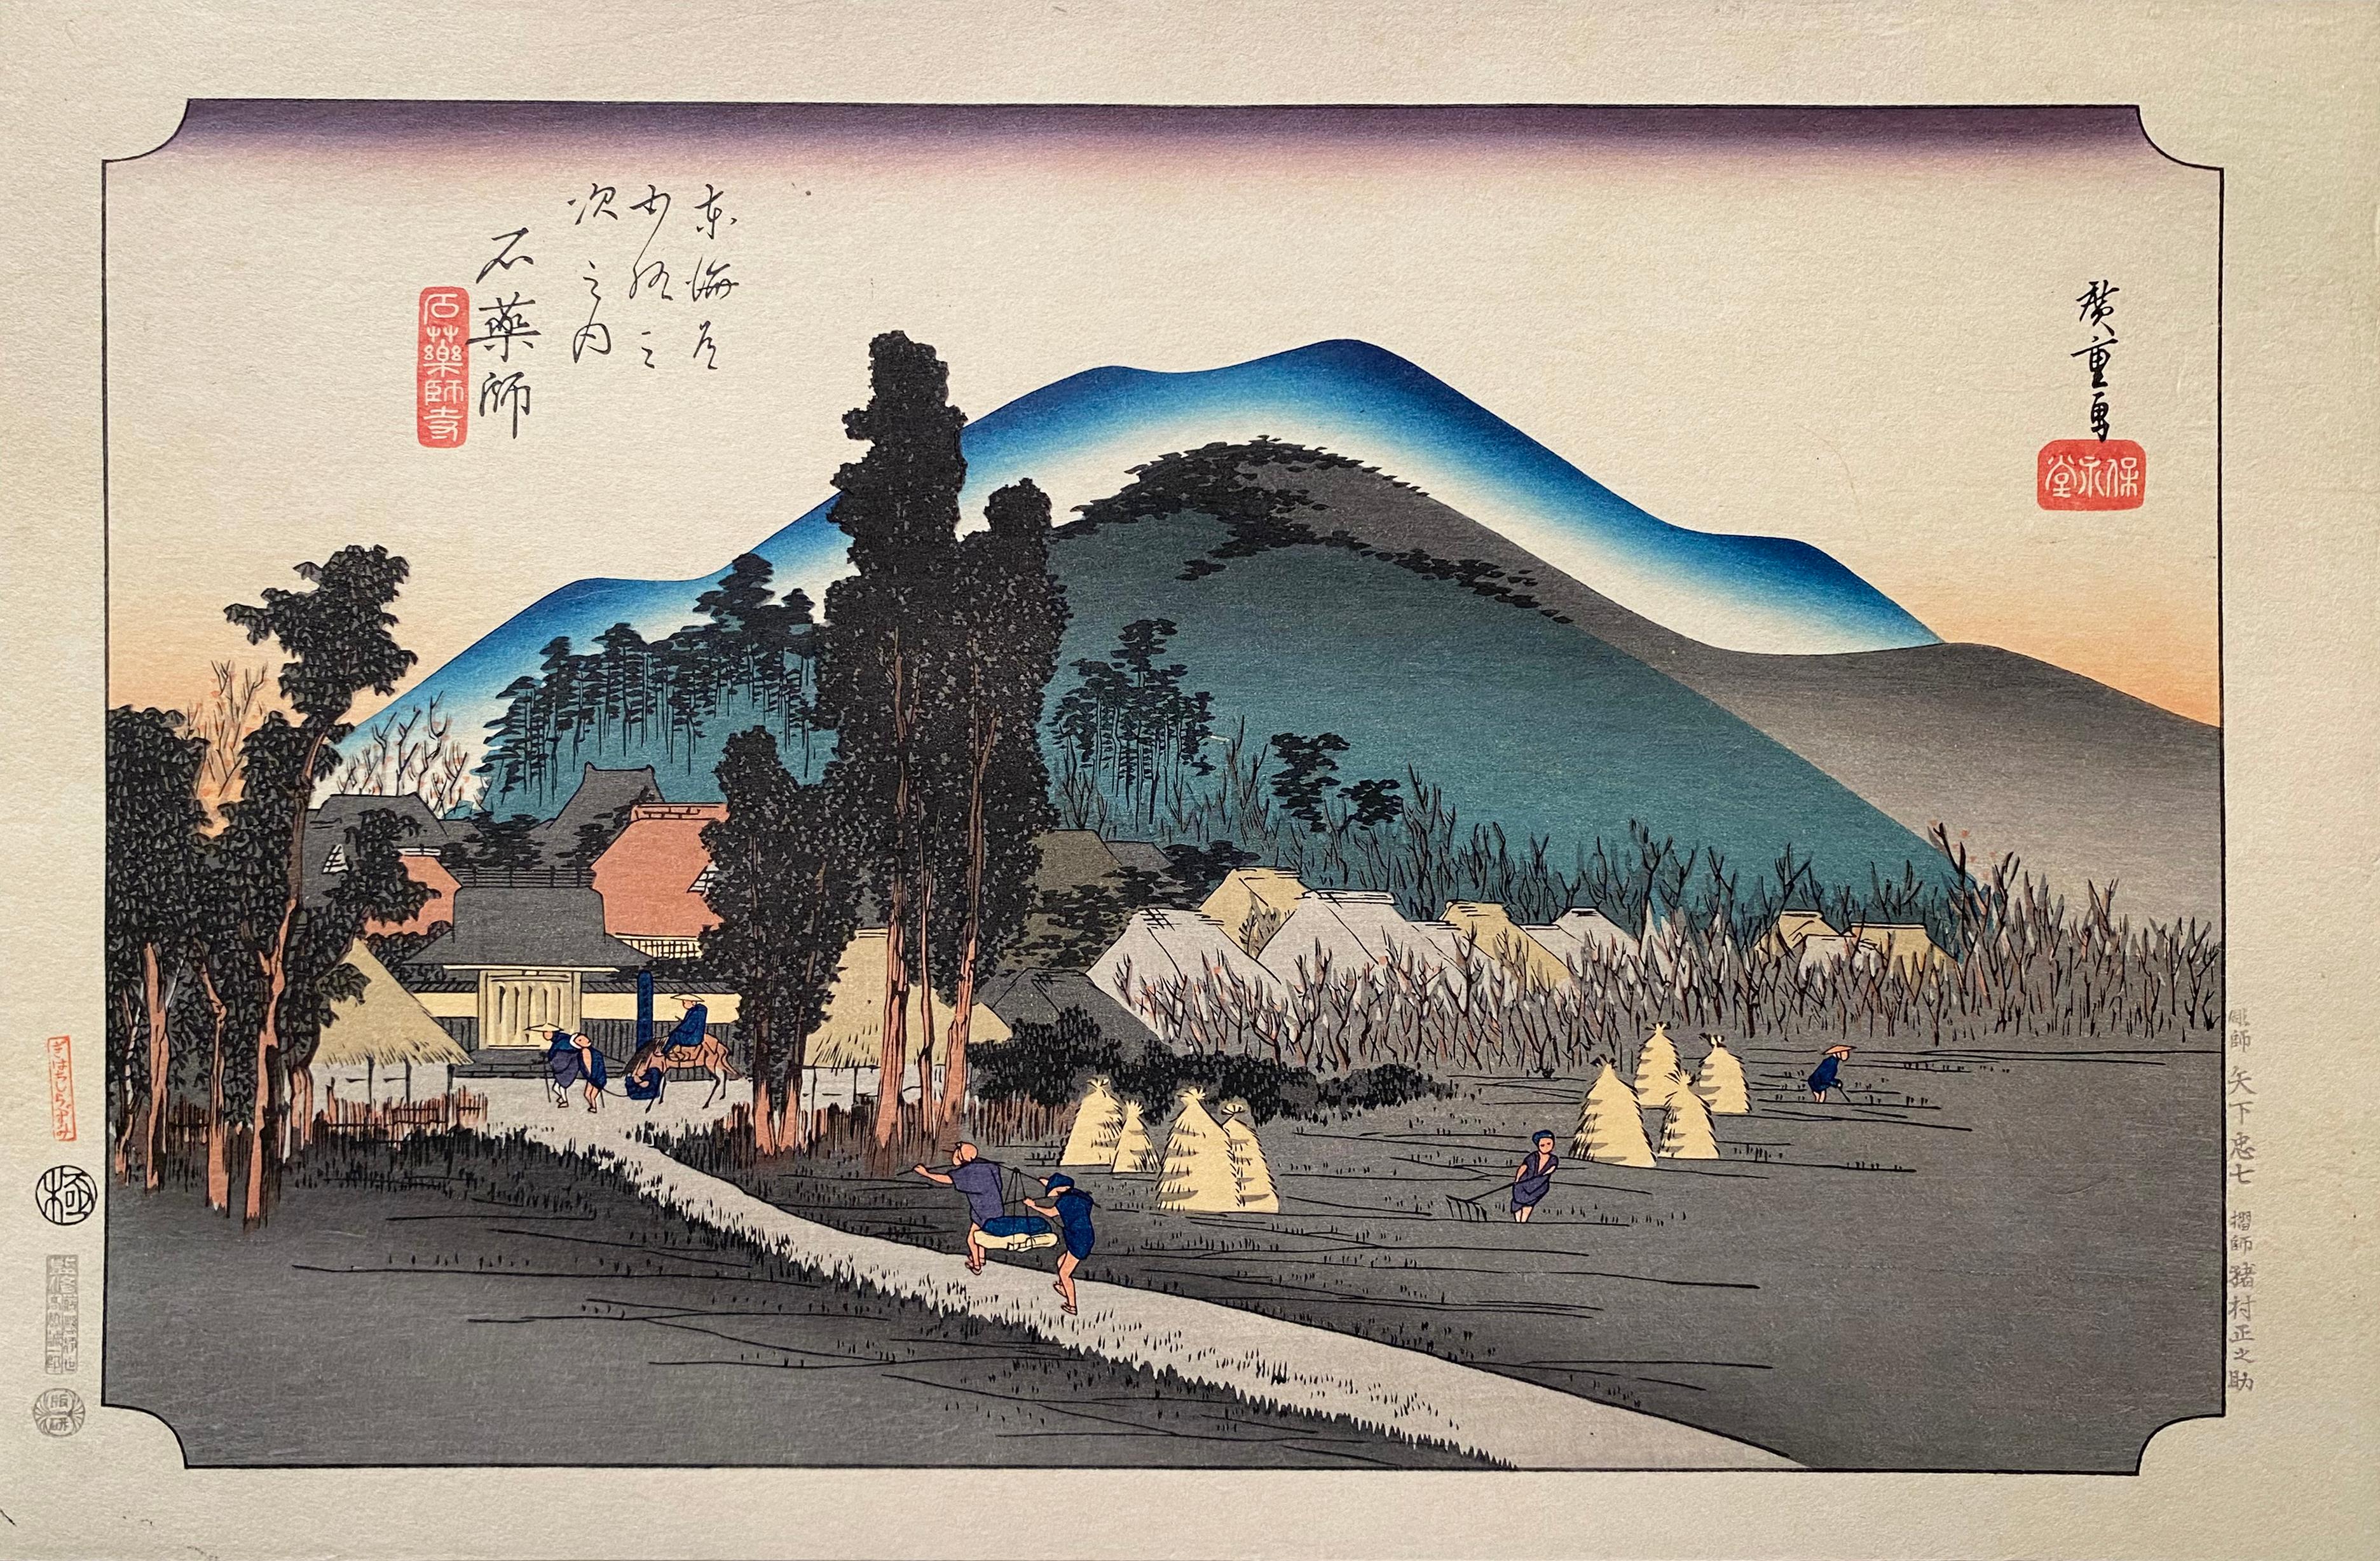 'Ishiyakushi Temple', After Utagawa Hiroshige 歌川廣重, Ukiyo-e Woodblock, Tokaido